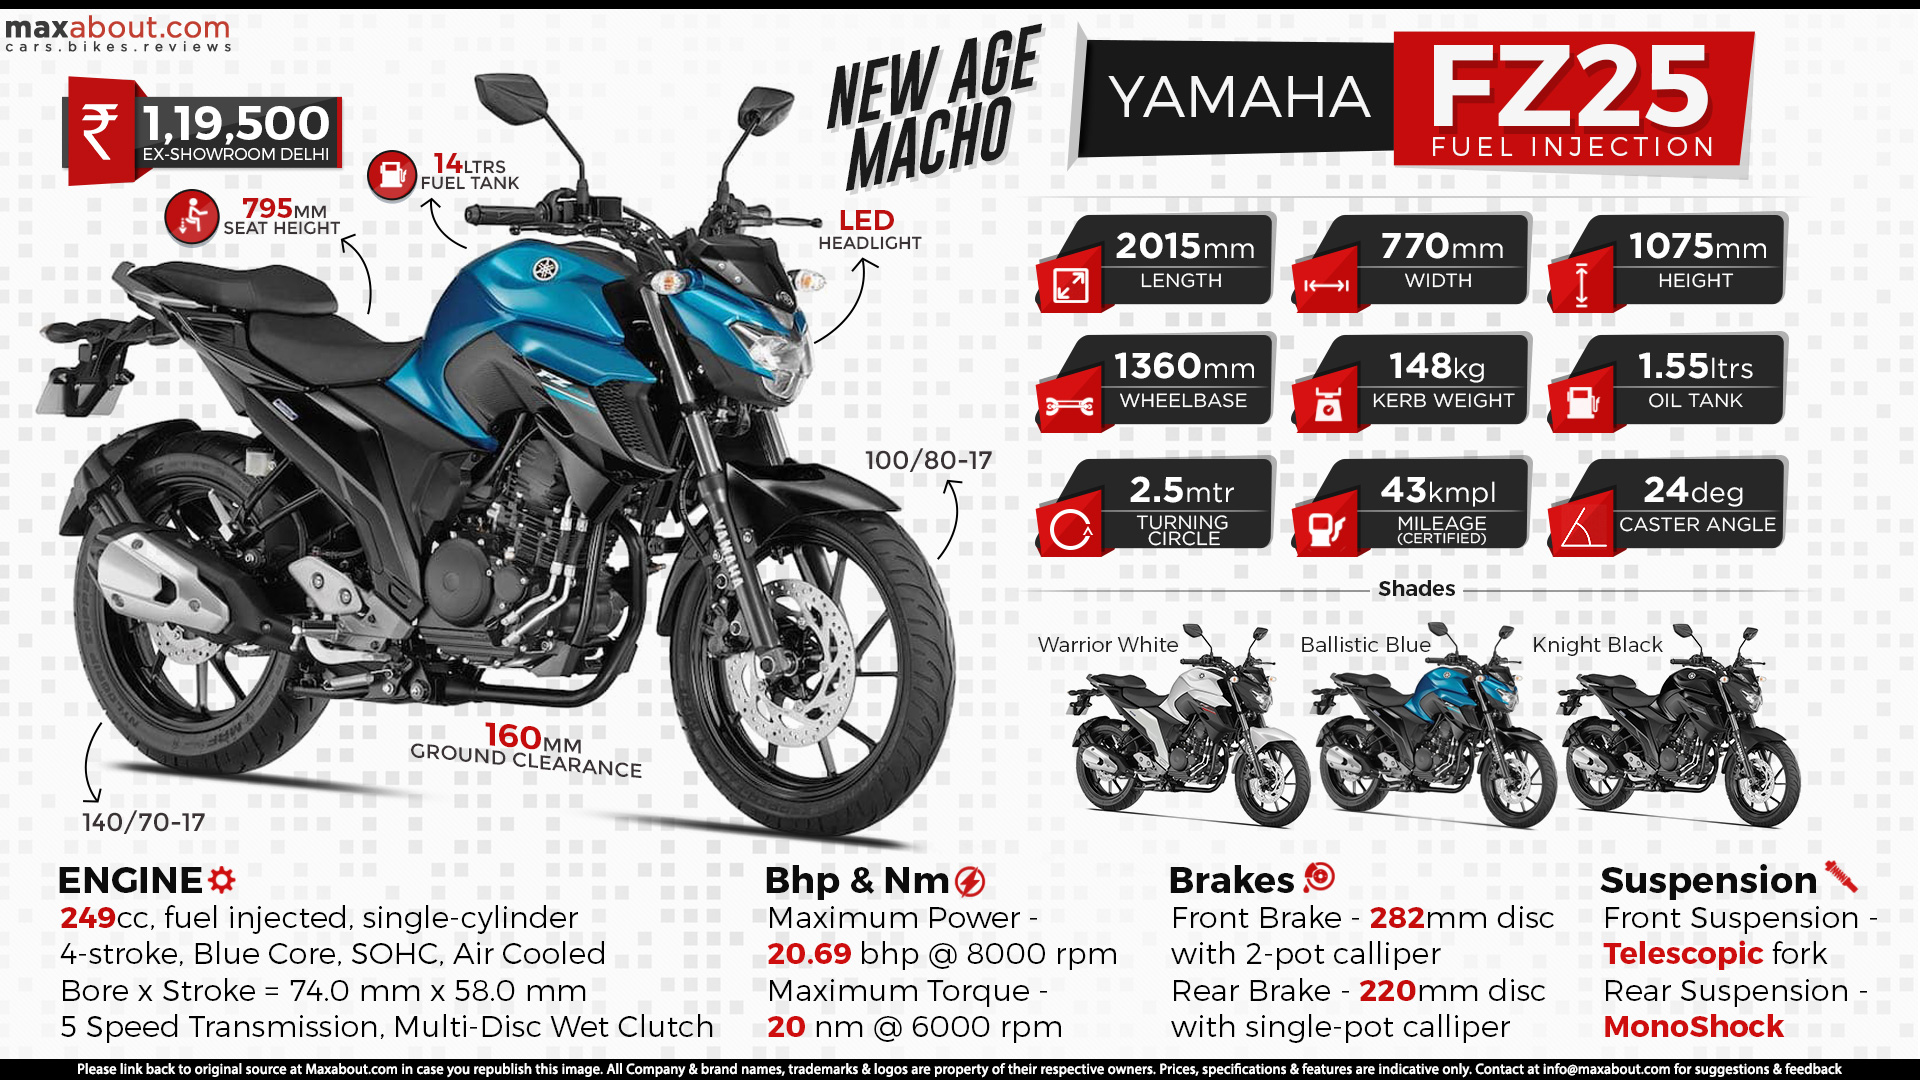 Yamaha FZ25 - Ride the Force Within